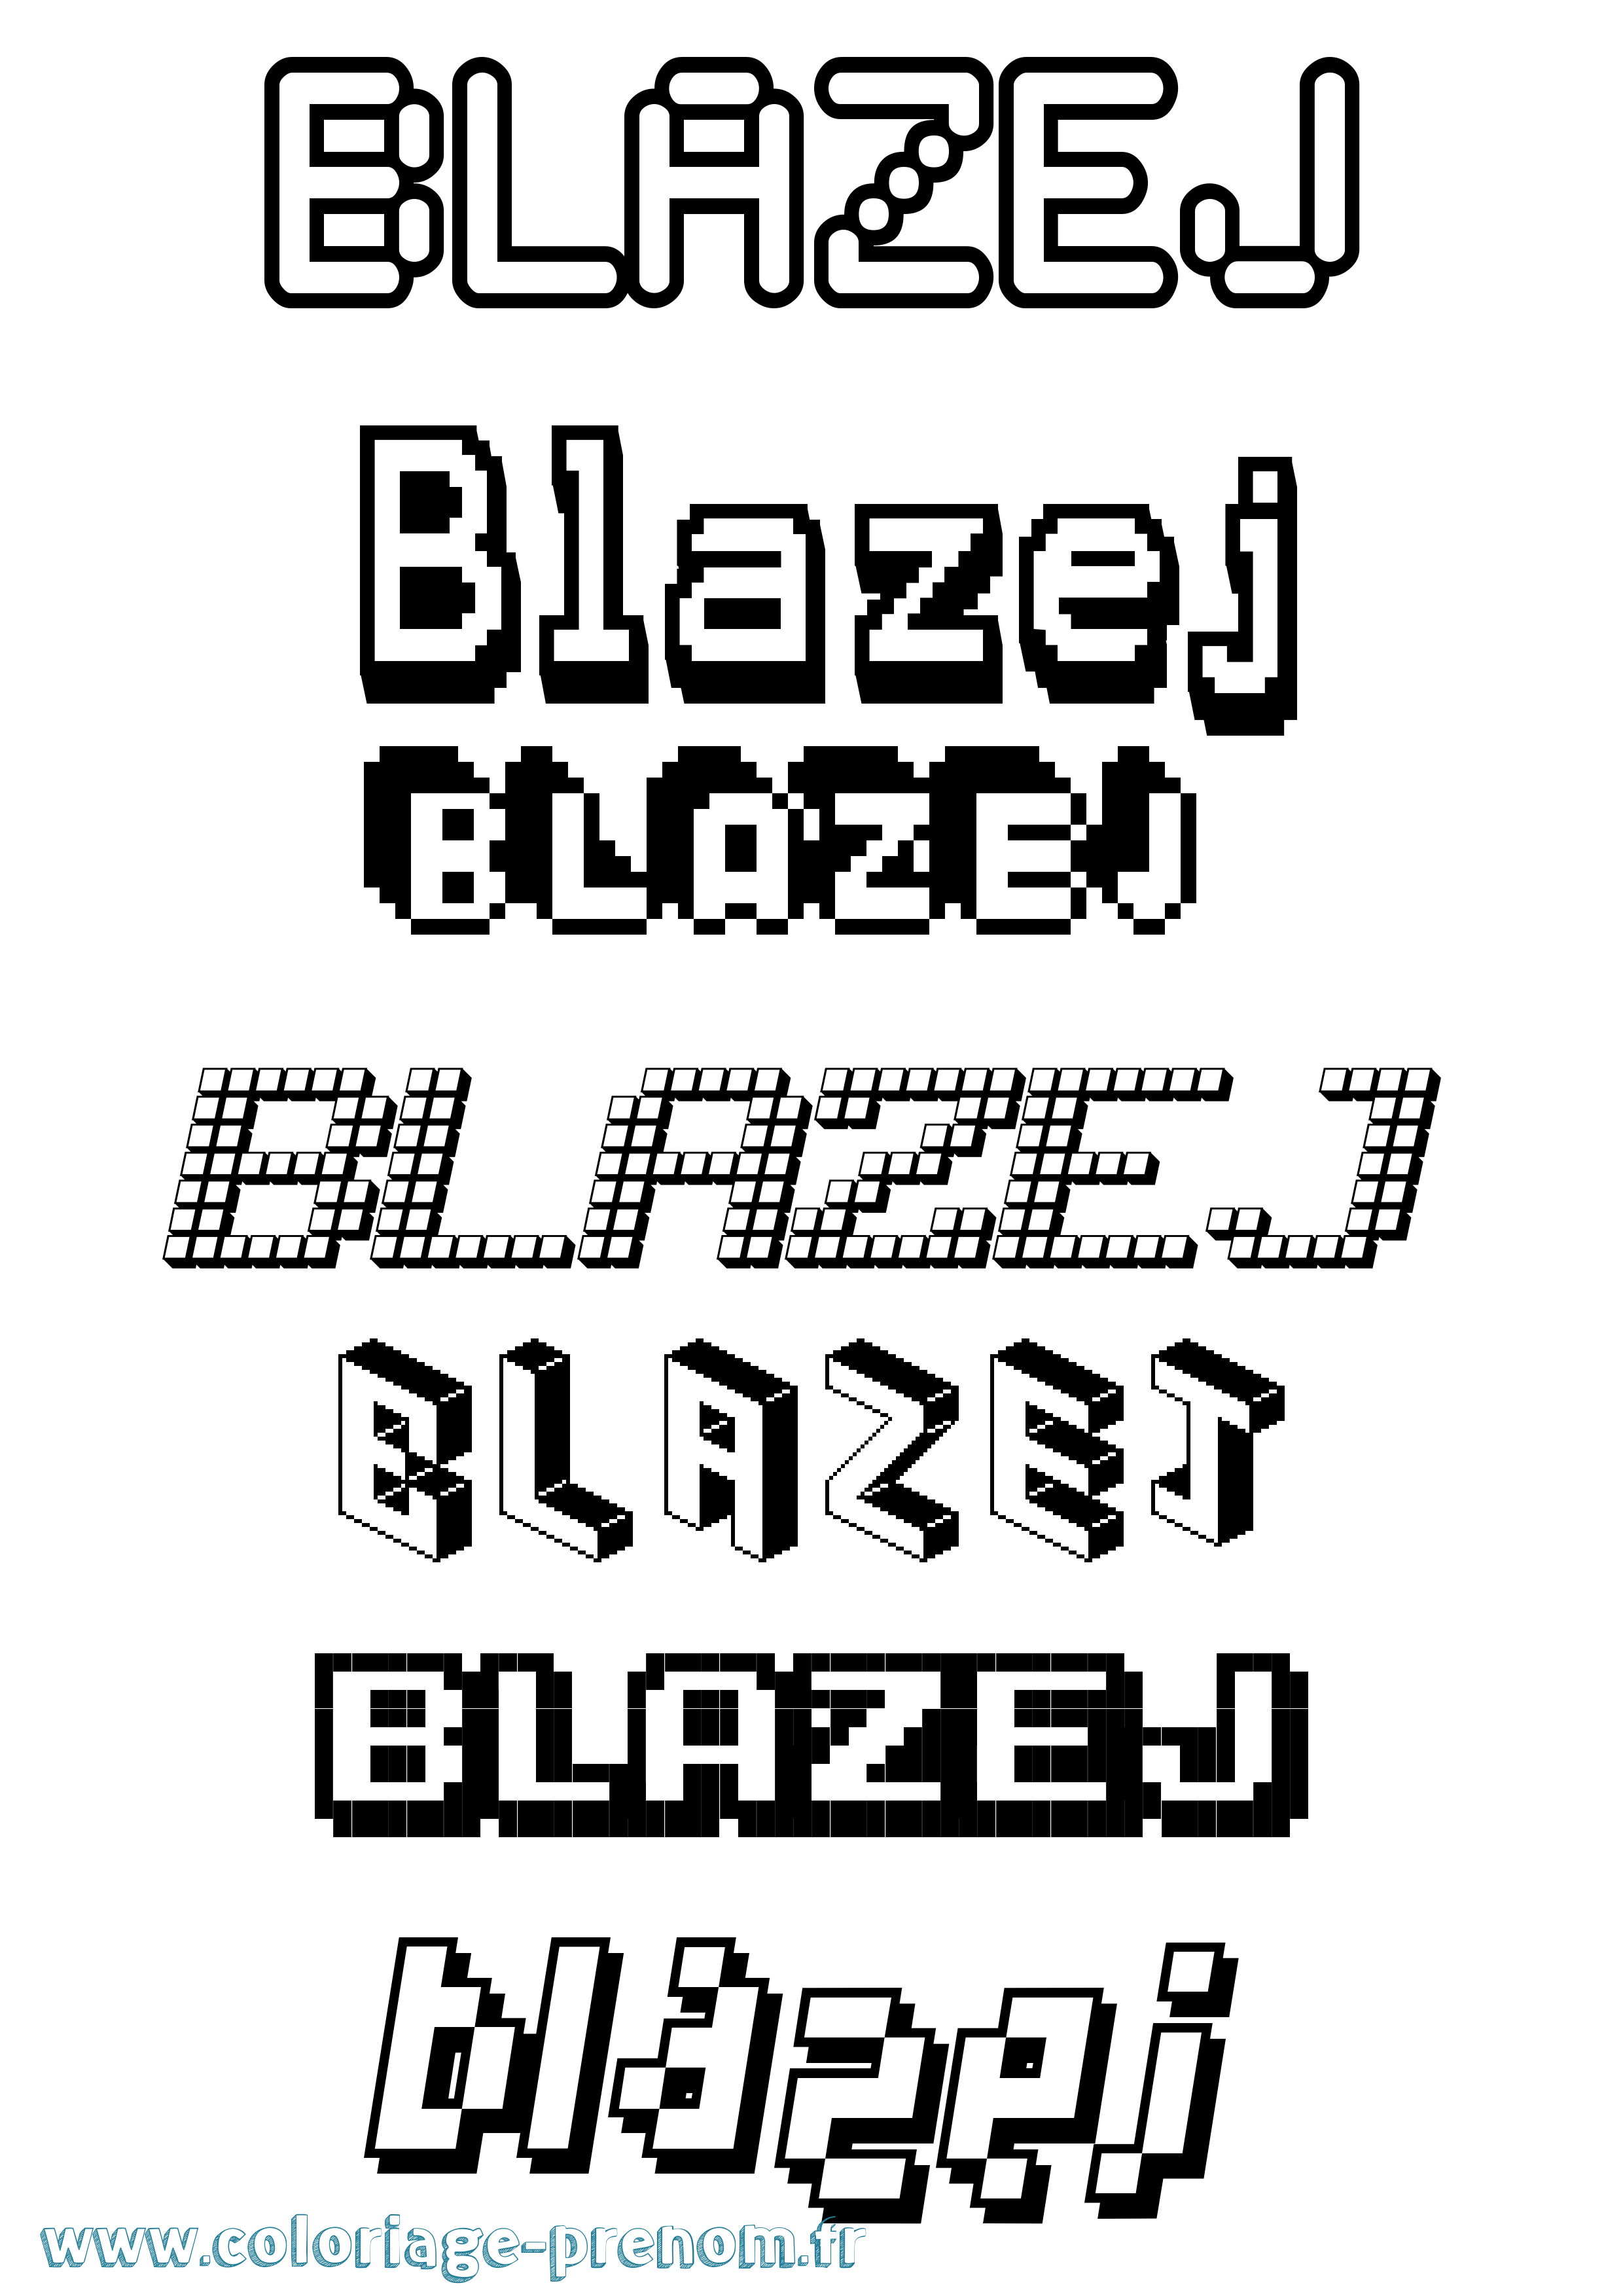 Coloriage prénom Blazej Pixel